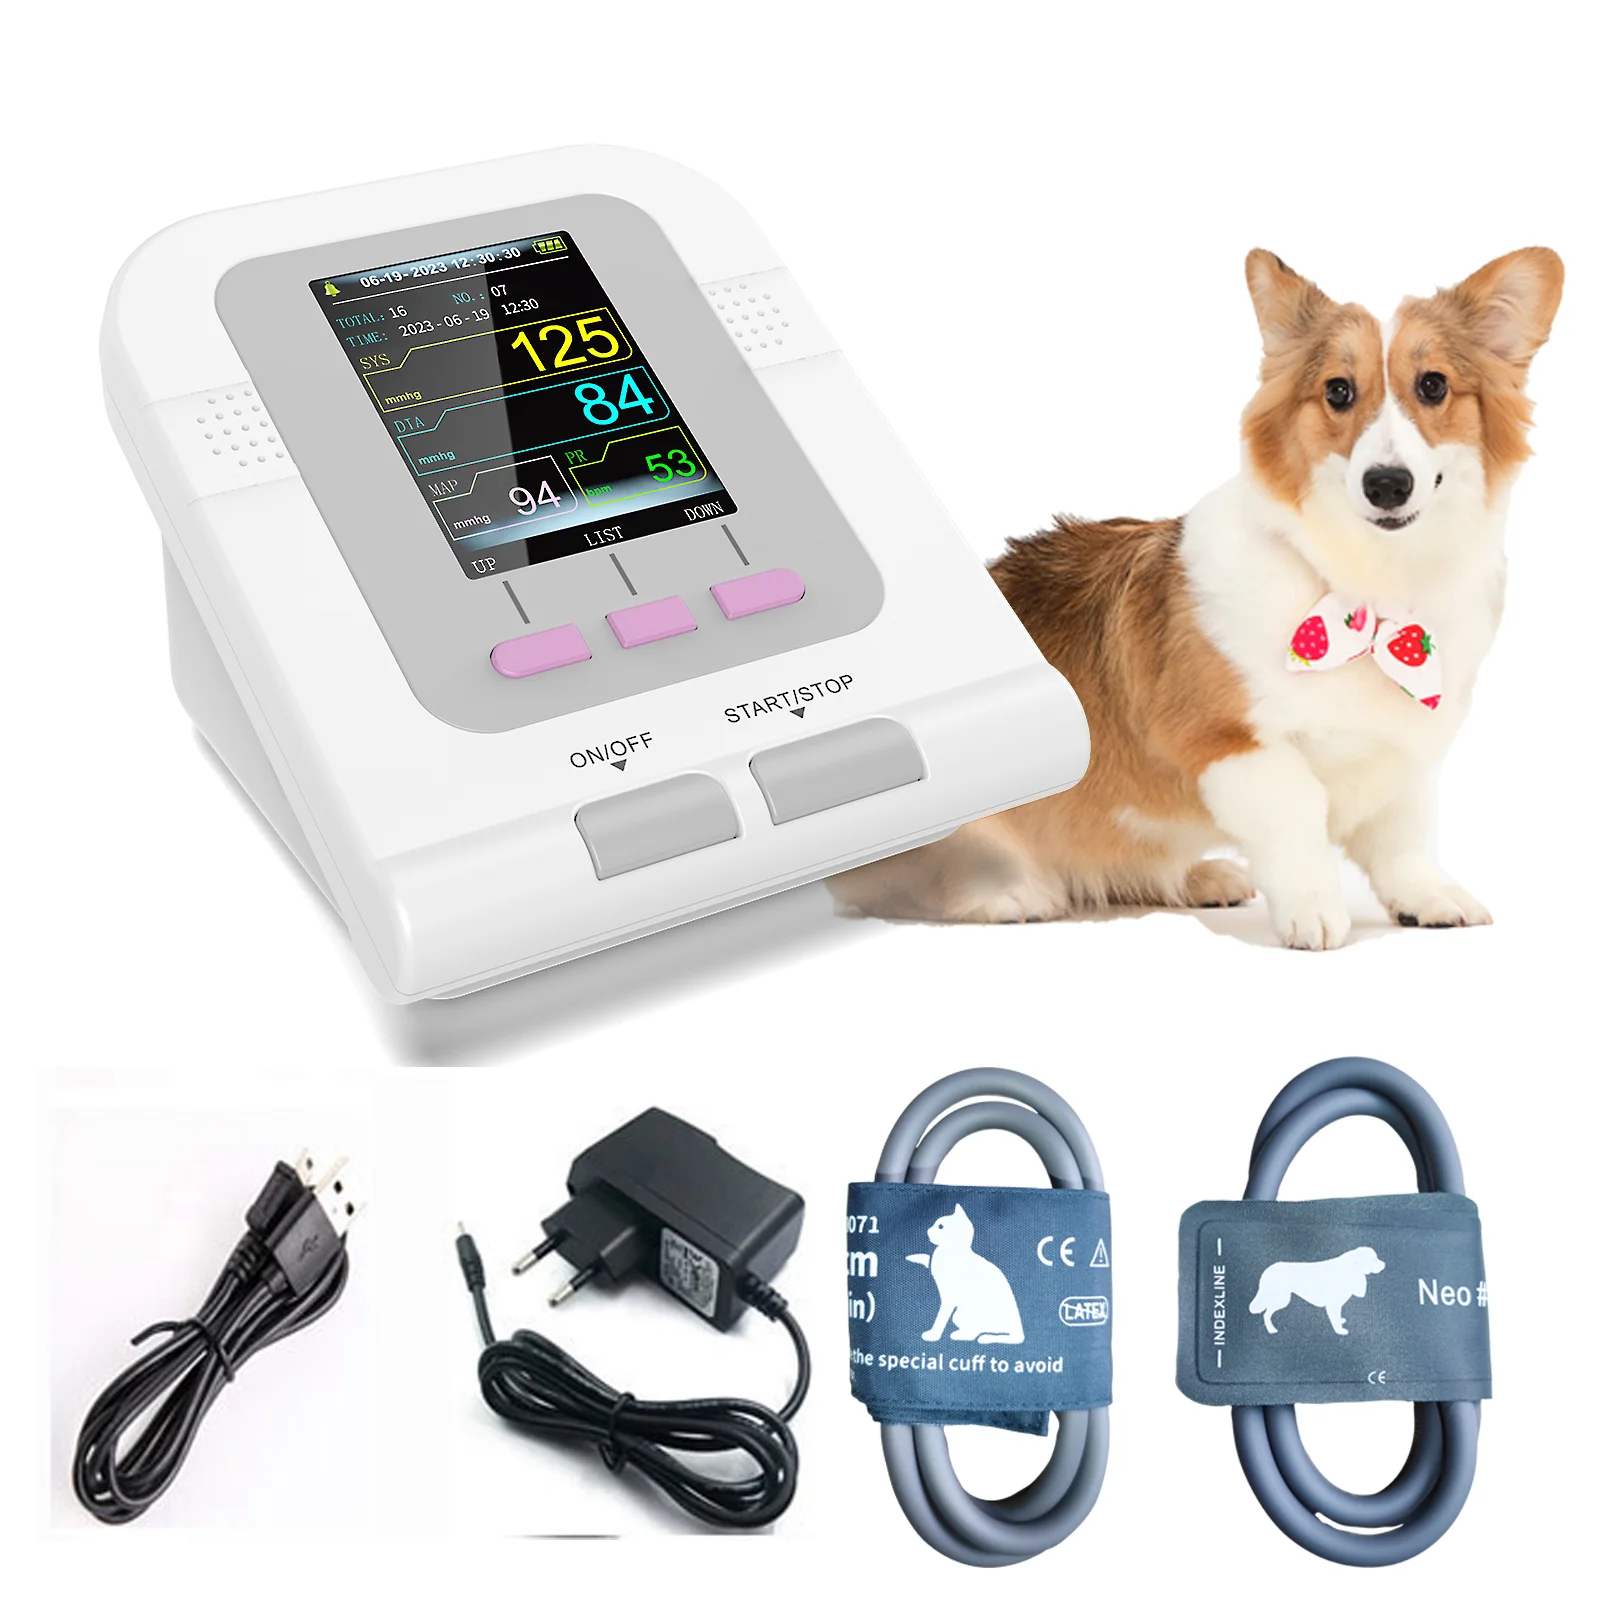 

CONTEC08A-VET, EU Plug and US PLUG, Dog/Cat/Pets Animal Care, Digital Veterinary Blood Pressure Monitor Cuff Medical Care